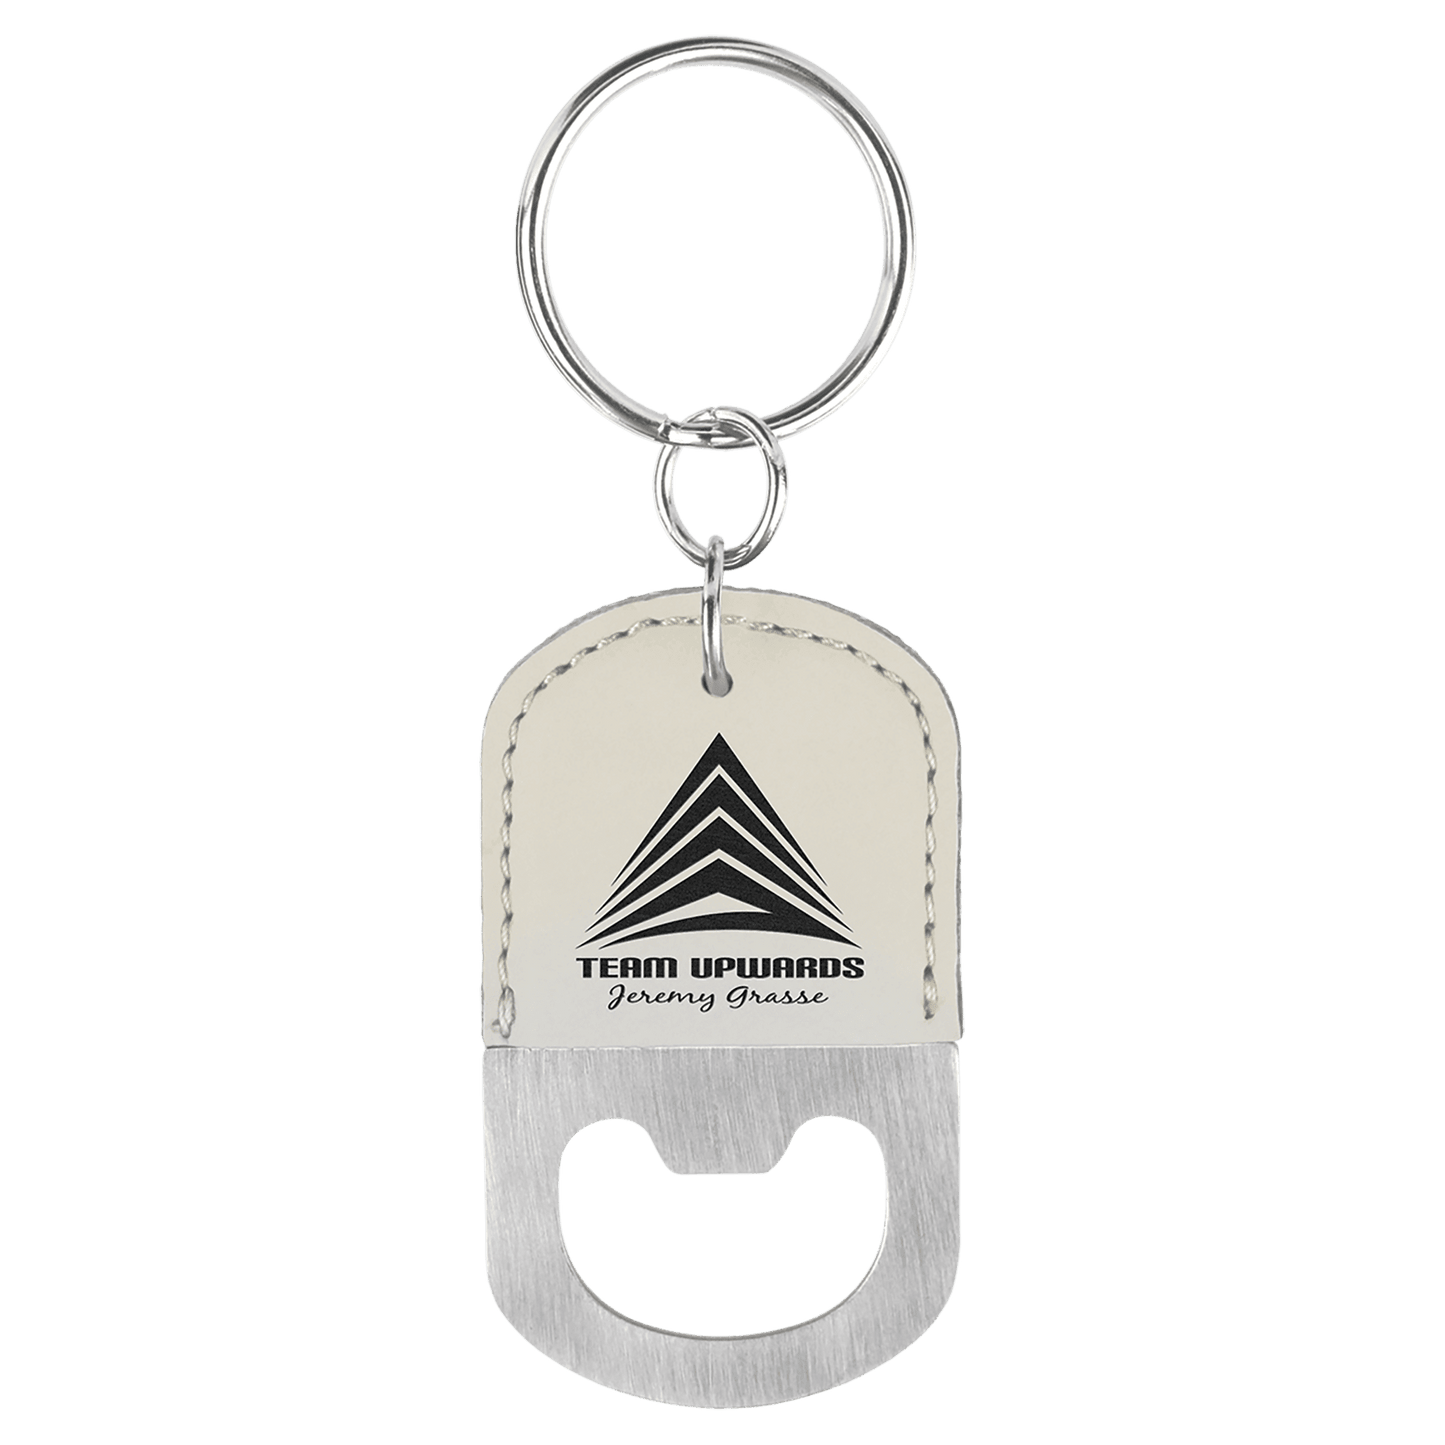 White Laserable Leatherette Oval Bottle Opener Keychain